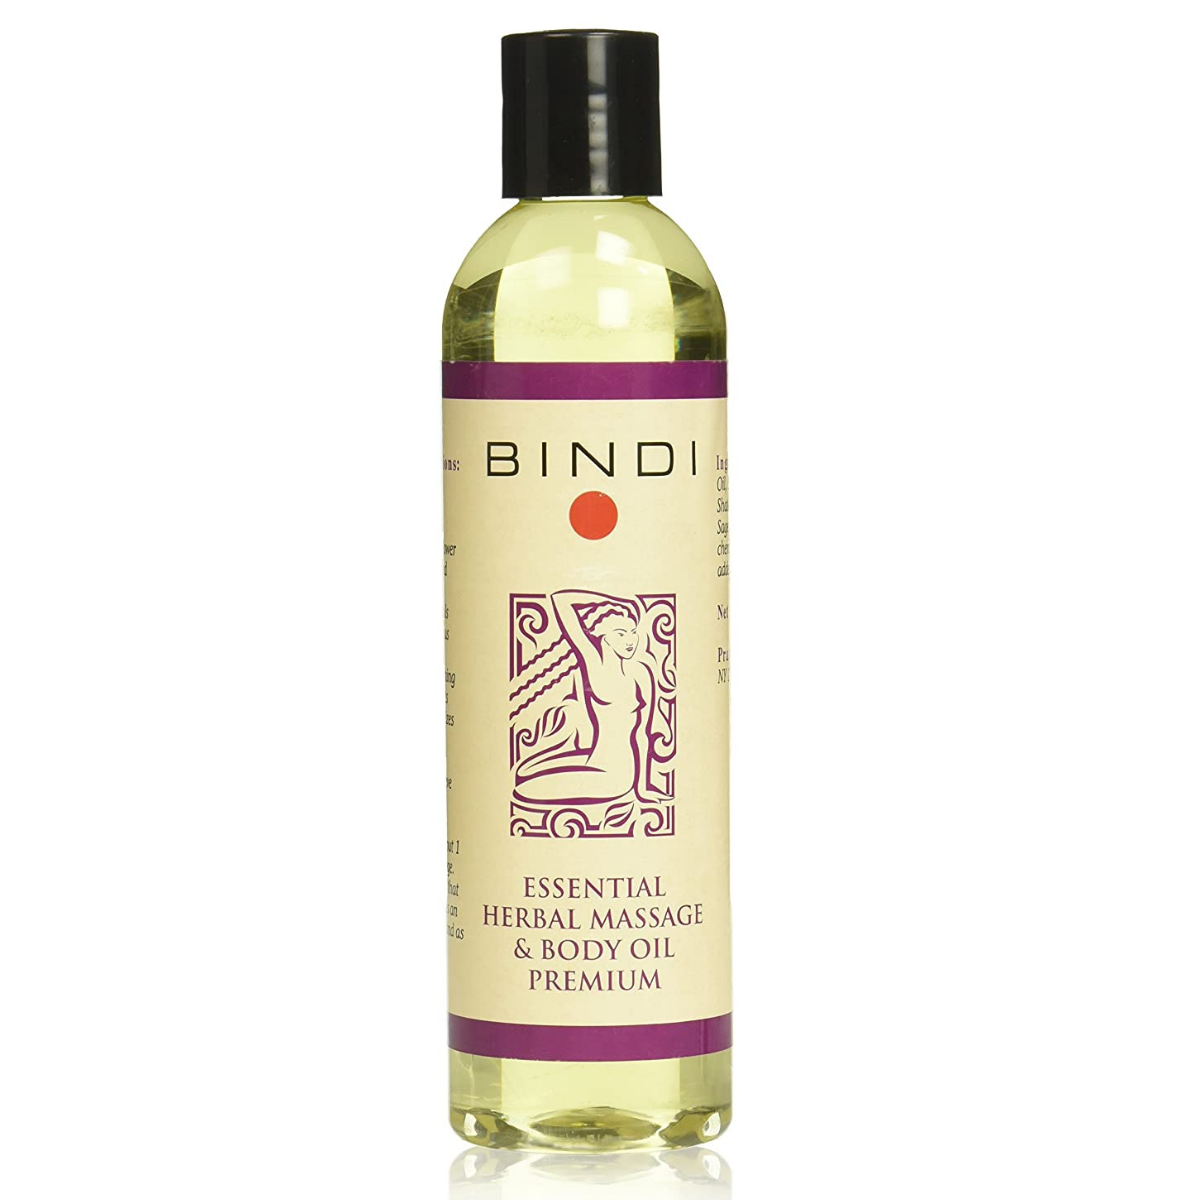 Primary image of Bindi Premium Massage Oil